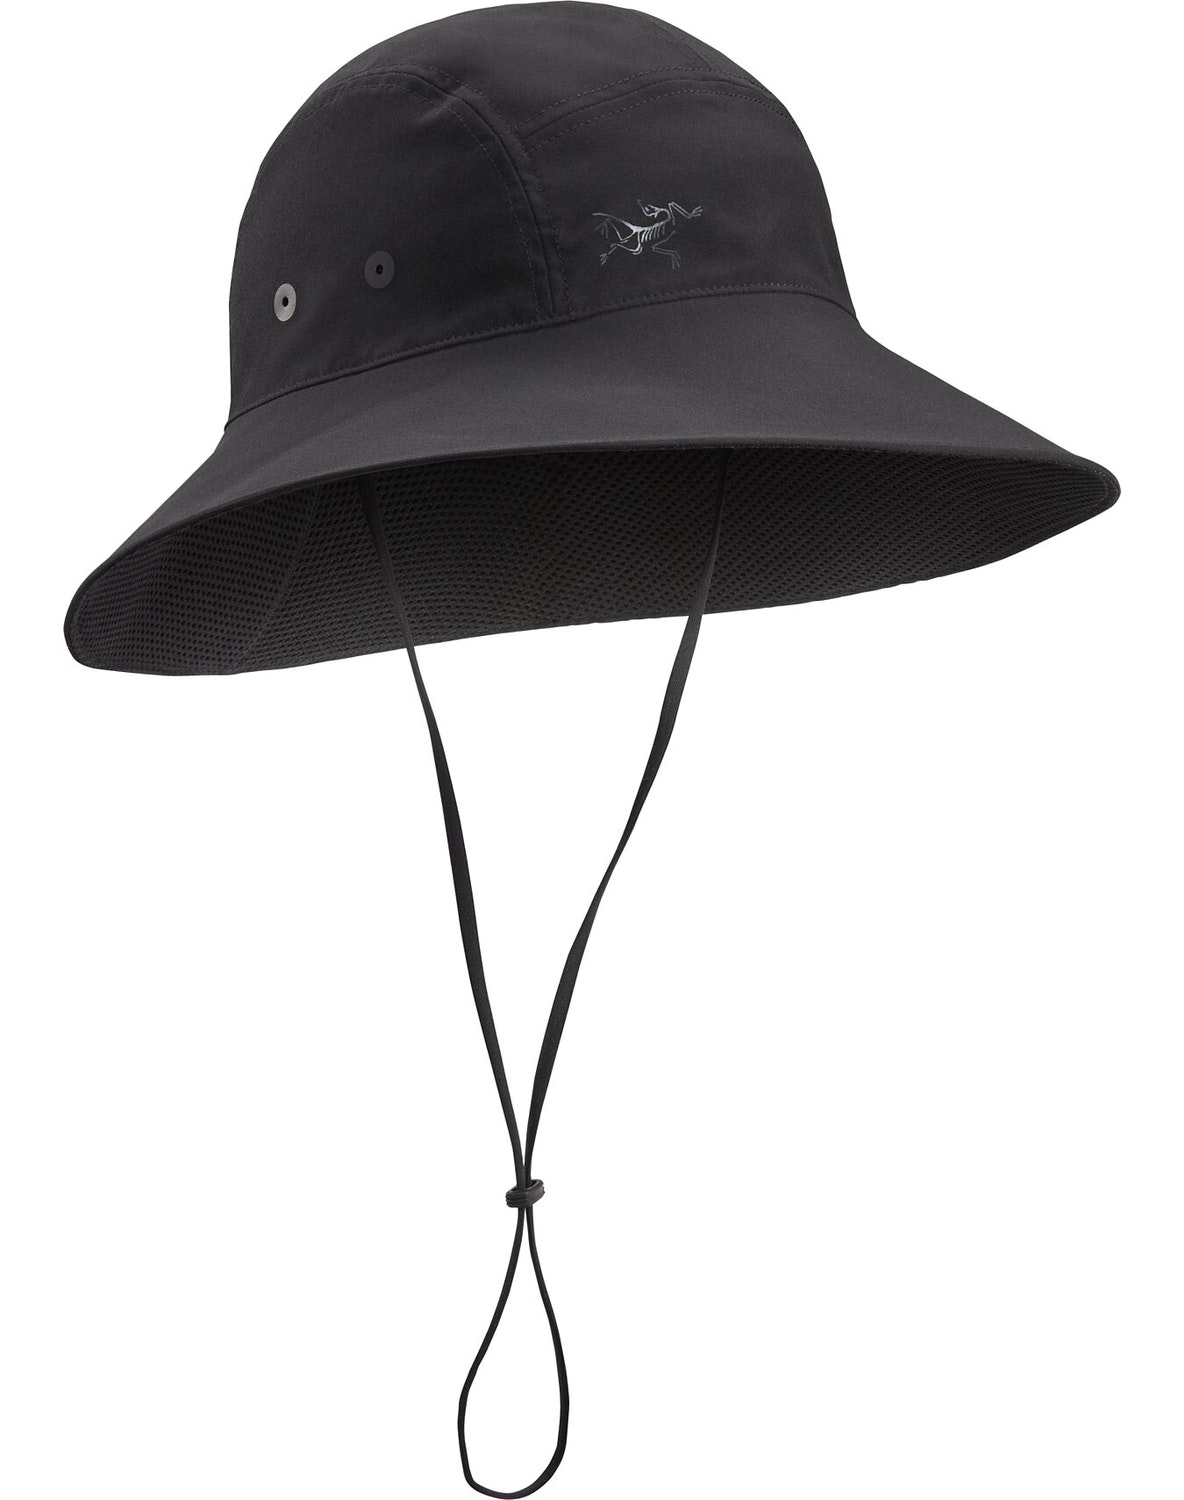 Hats Arc'teryx Sinsola Uomo Nere - IT-4154973